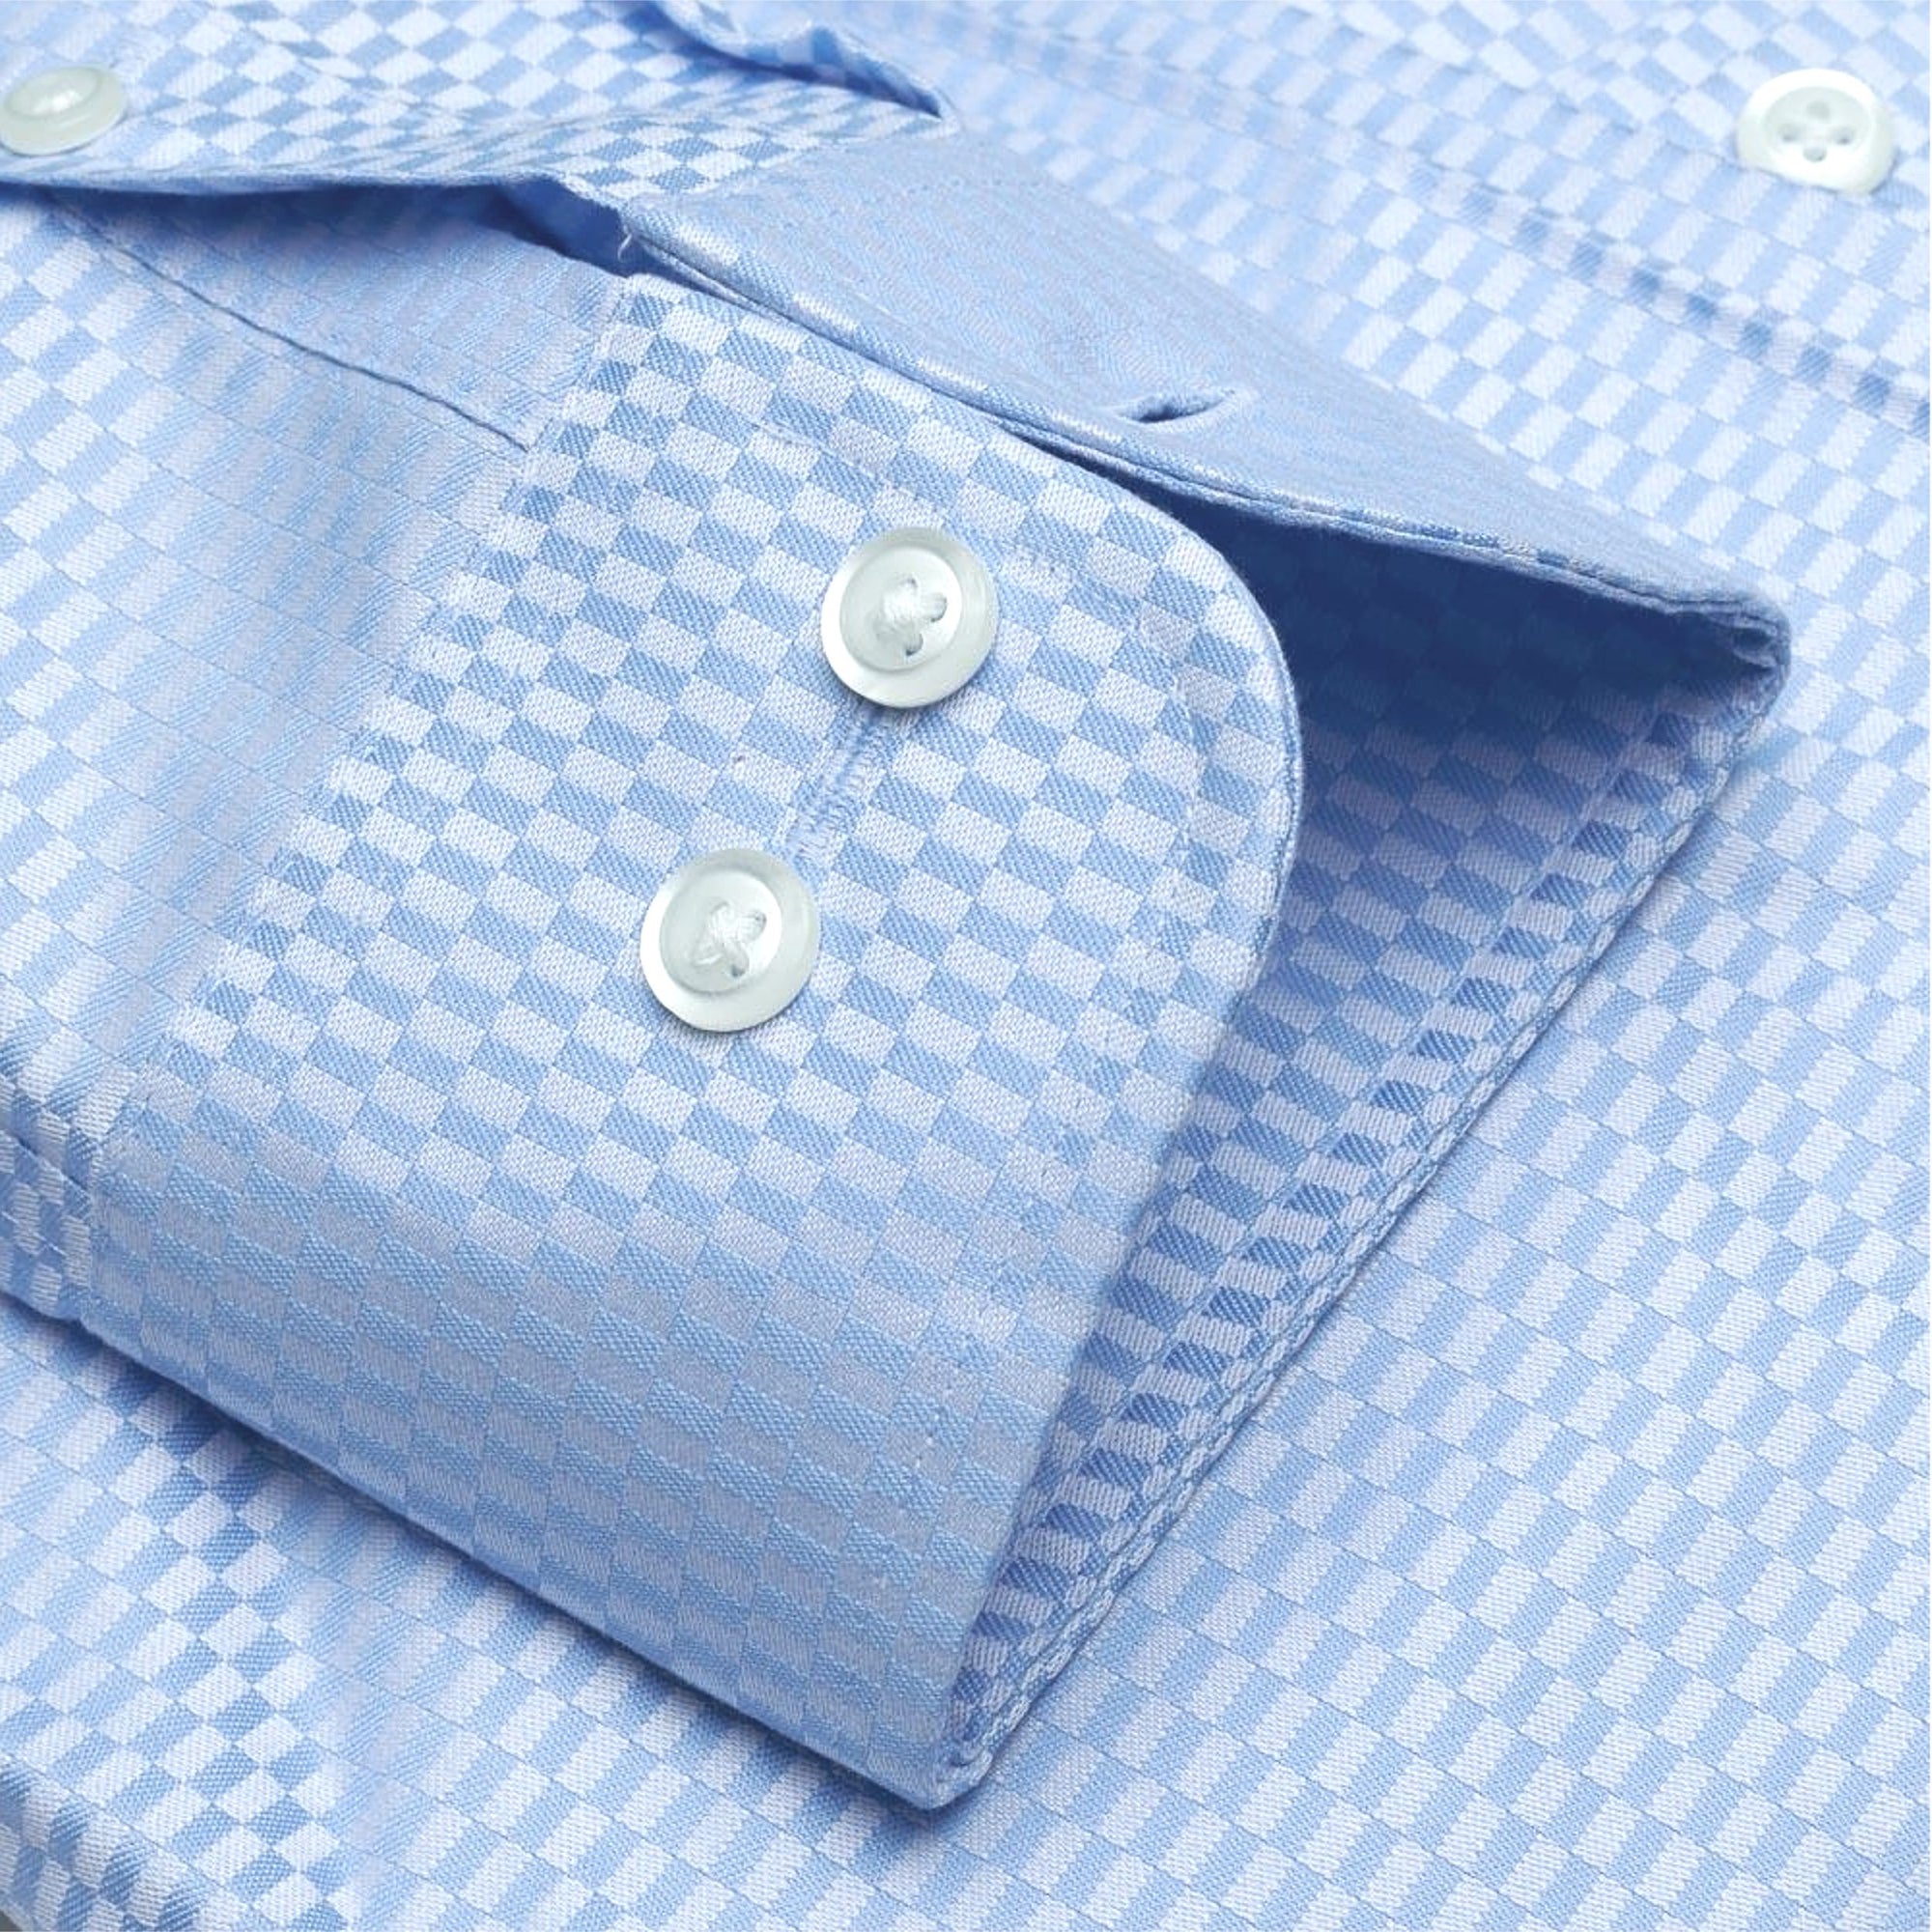 The Washington - Wrinkle-Free Tonal Check Cotton Dress Shirt in Blue by Cooper & Stewart